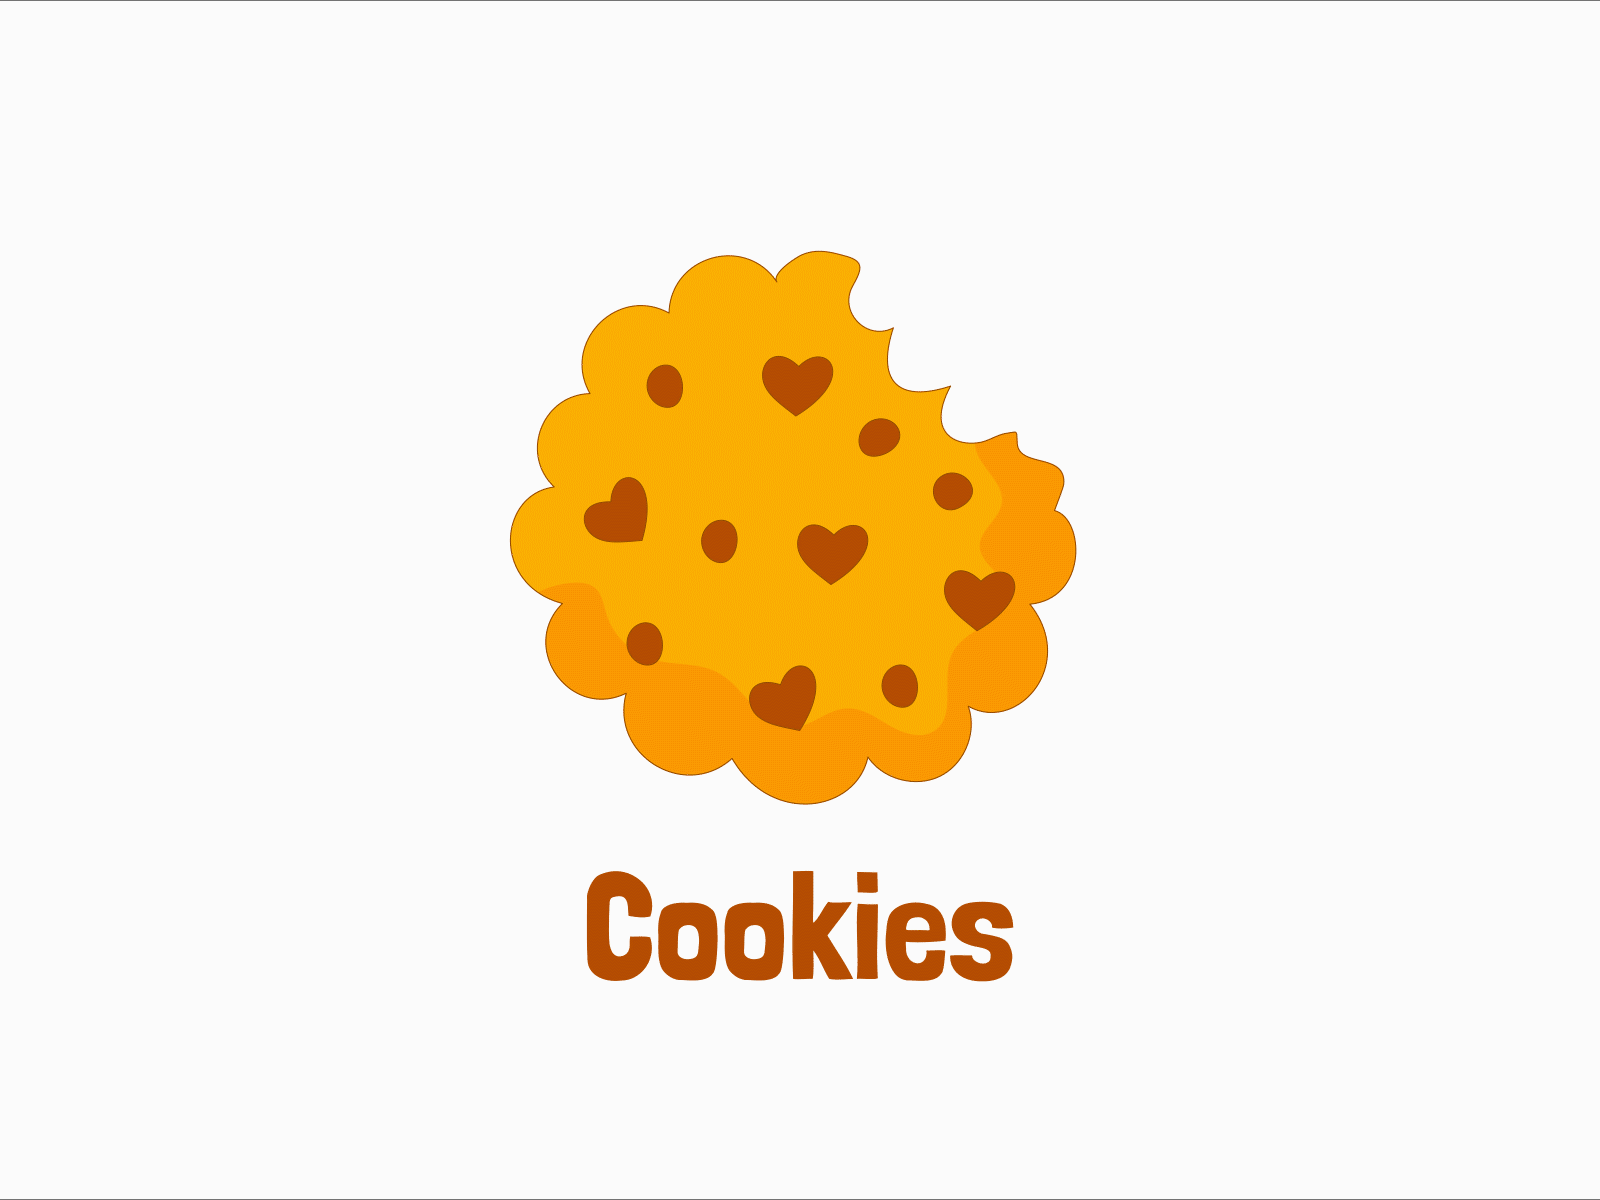 Cookies logo animation